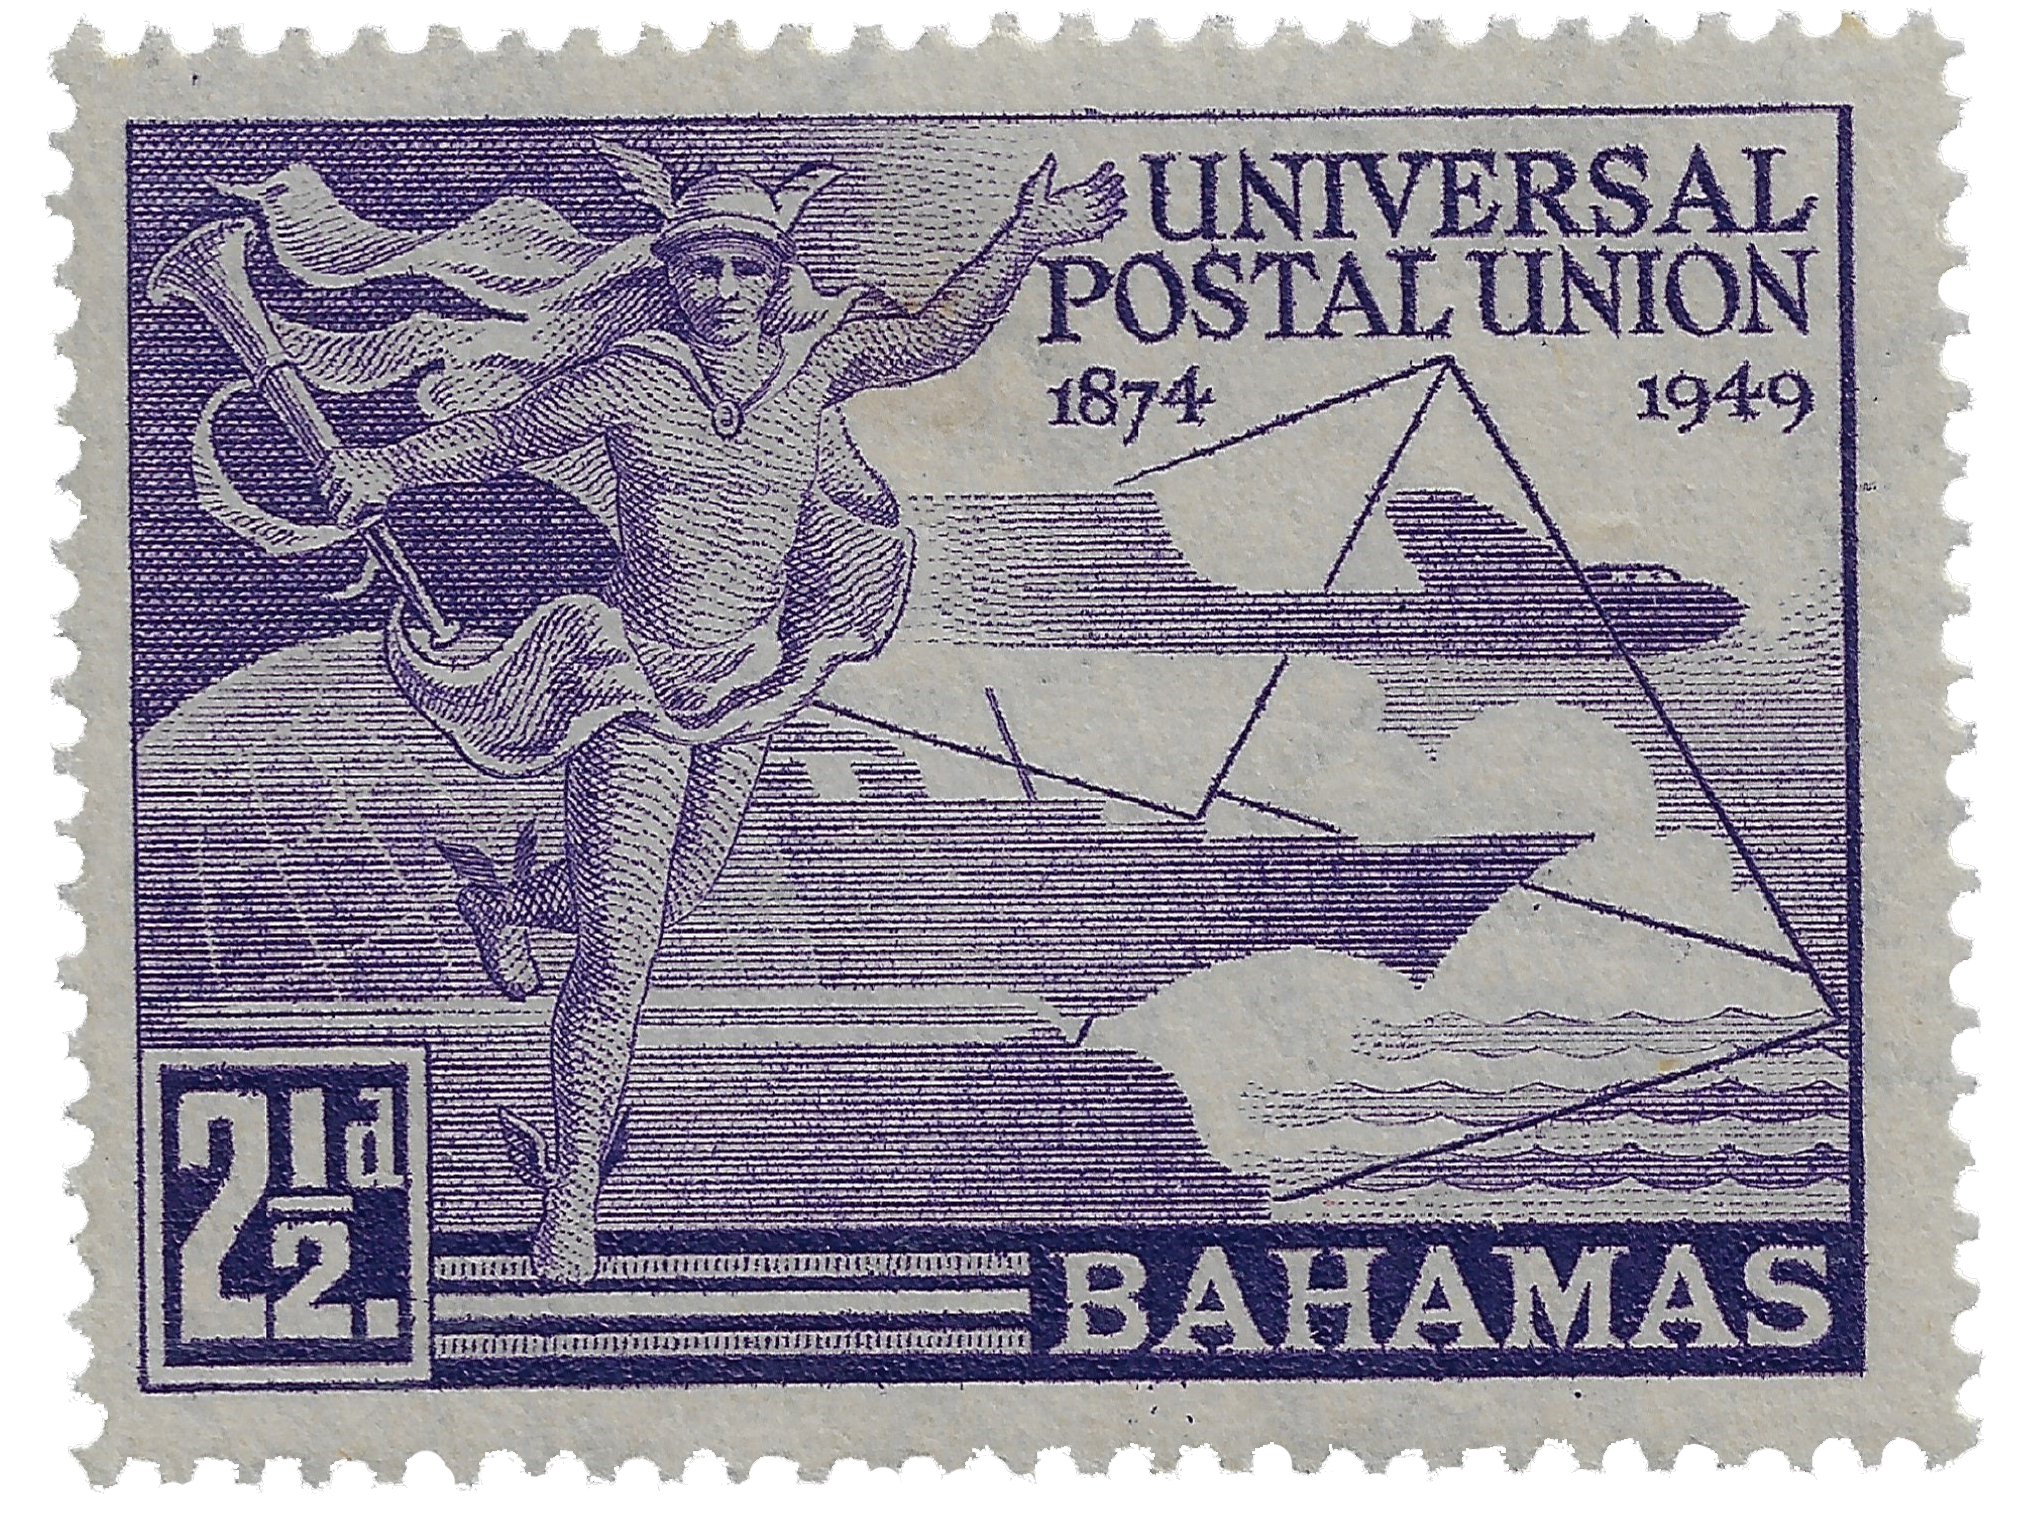 2.5d 1949, Universal Posta Union 1874-1949